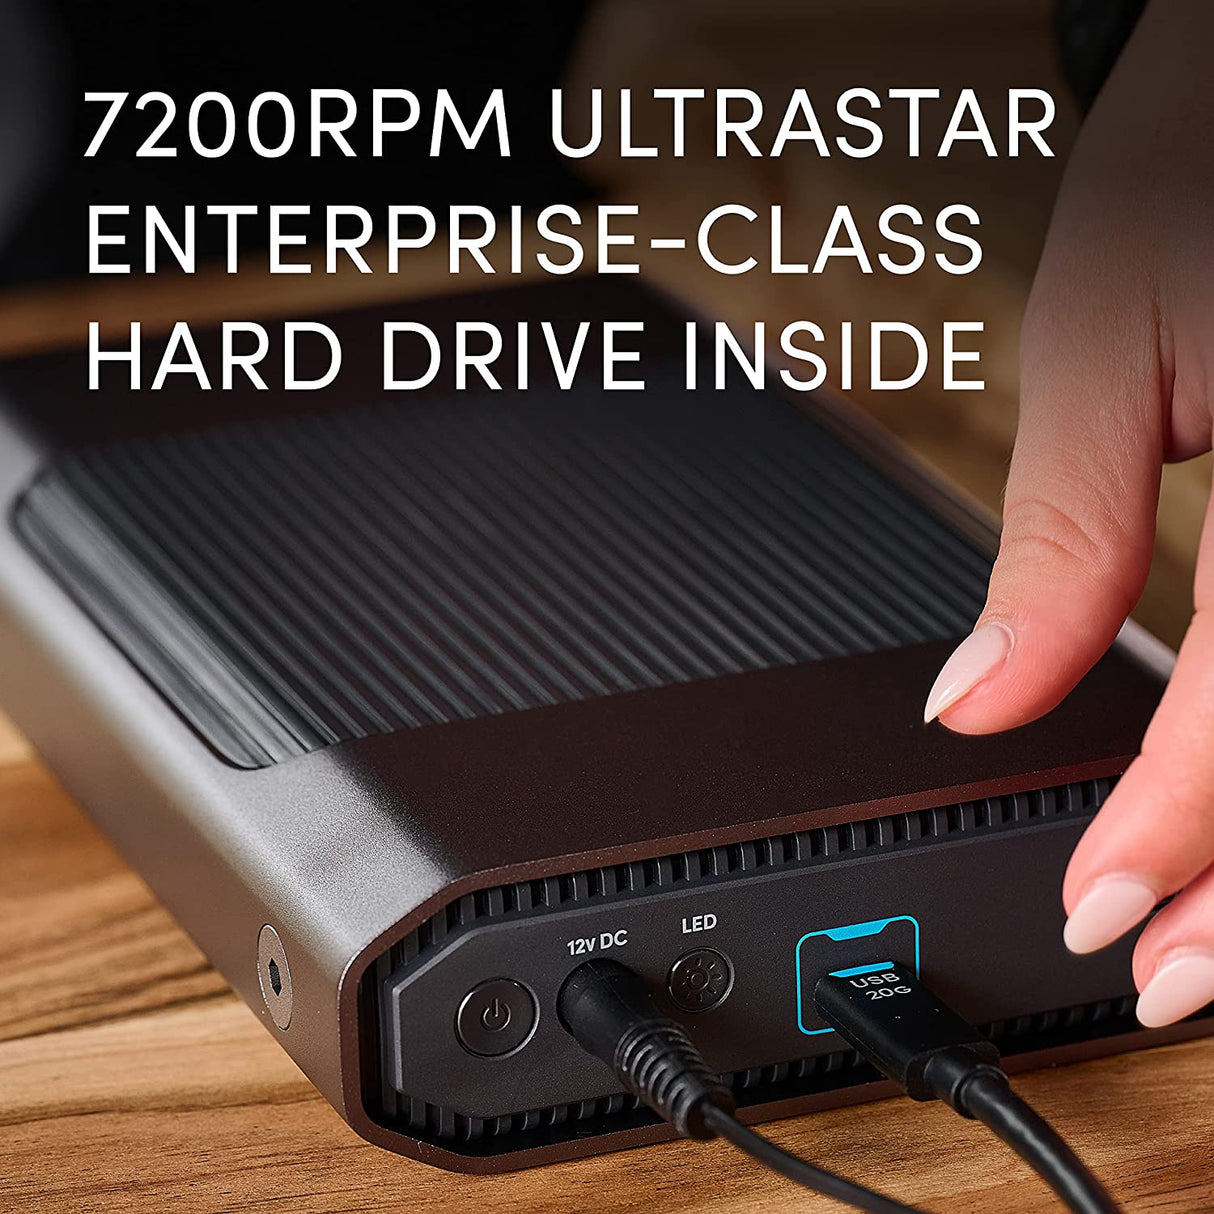 SanDisk Professional 6TB G-Drive Enterprise-Class External Desktop Hard Drive - 7200RPM Ultrastar HDD Inside, USB-C (10Gbps), USB 3.2 Gen 2, Mac Ready - SDPHF1A-006T-NBAAD New Generation 6TB